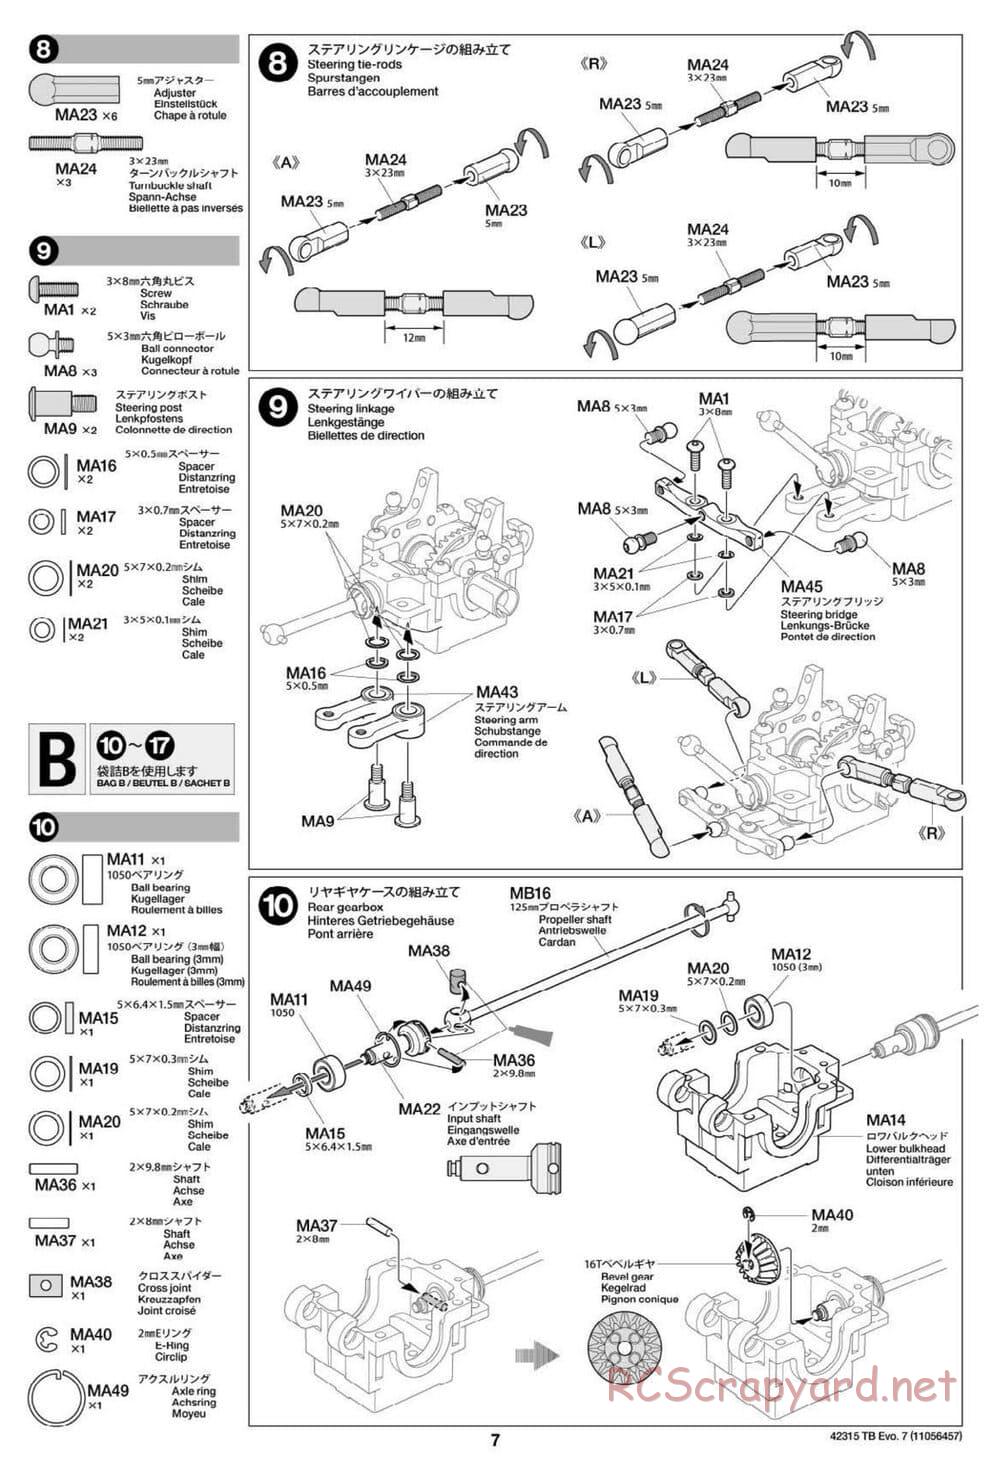 Tamiya - TB Evo.7 Chassis - Manual - Page 7